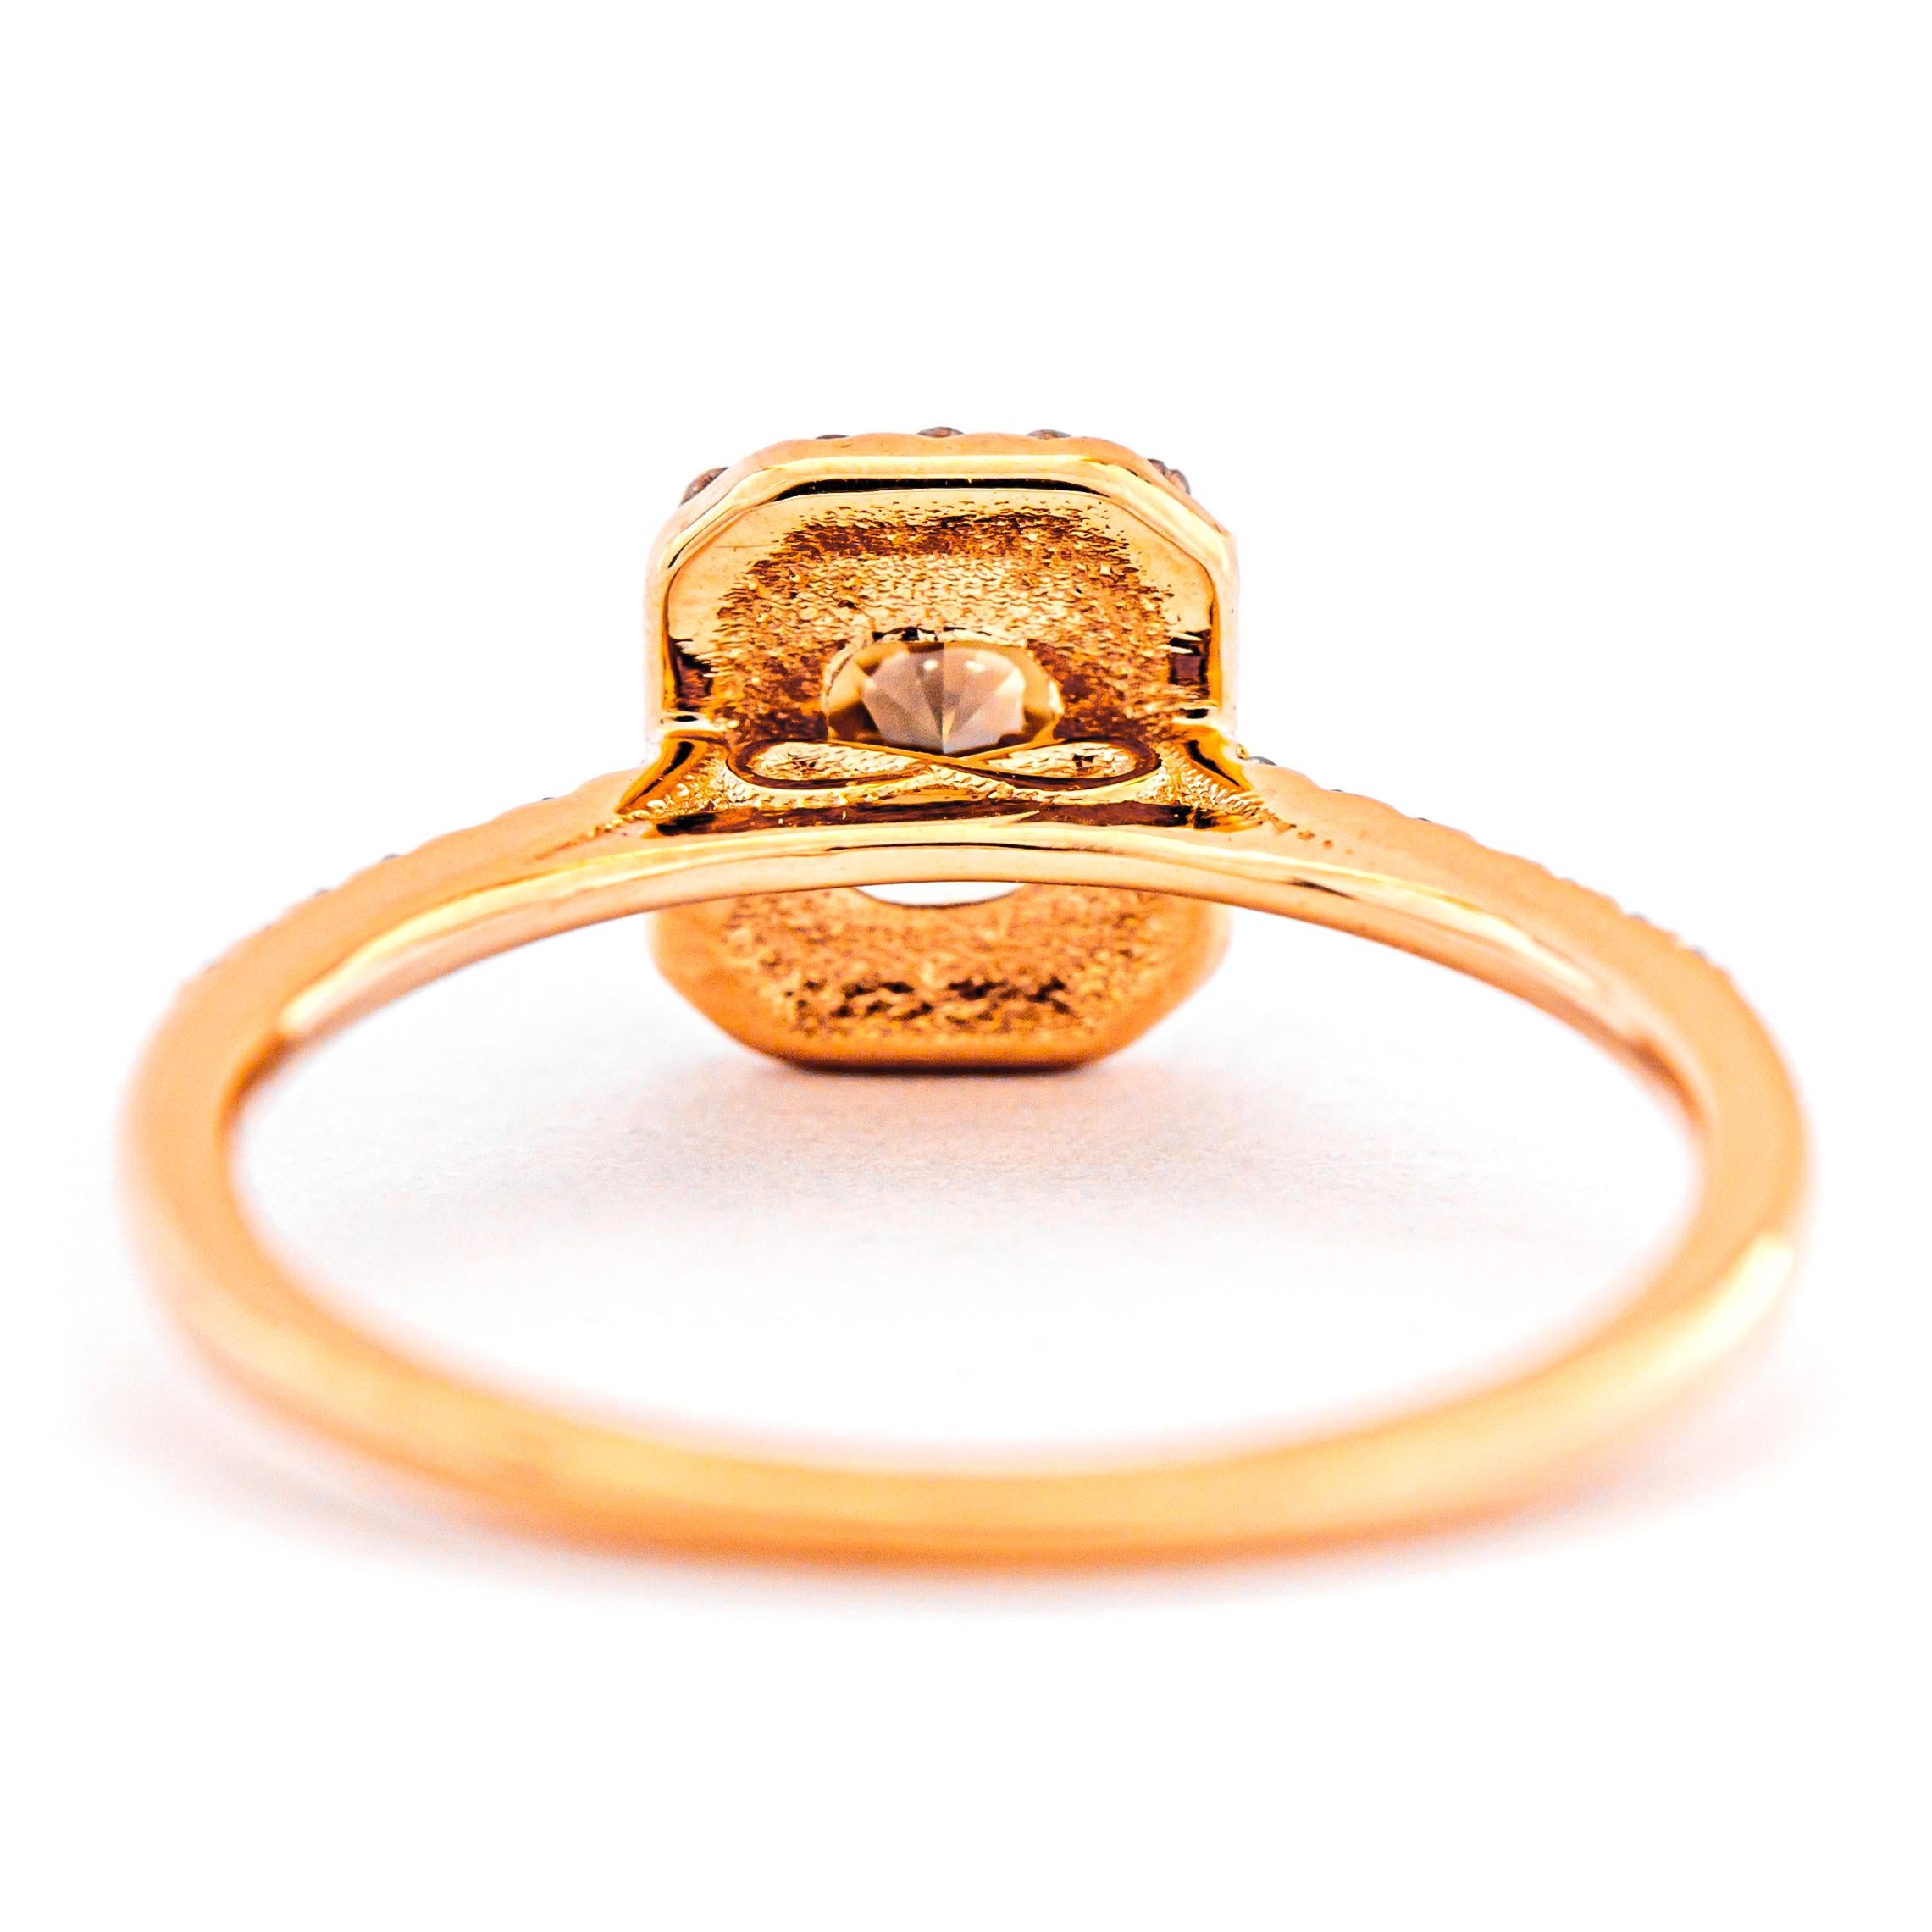 1.01 Ct VS2 Natural Fancy Intense Yellow Brown Diamond Ring, No Reserve Price 2